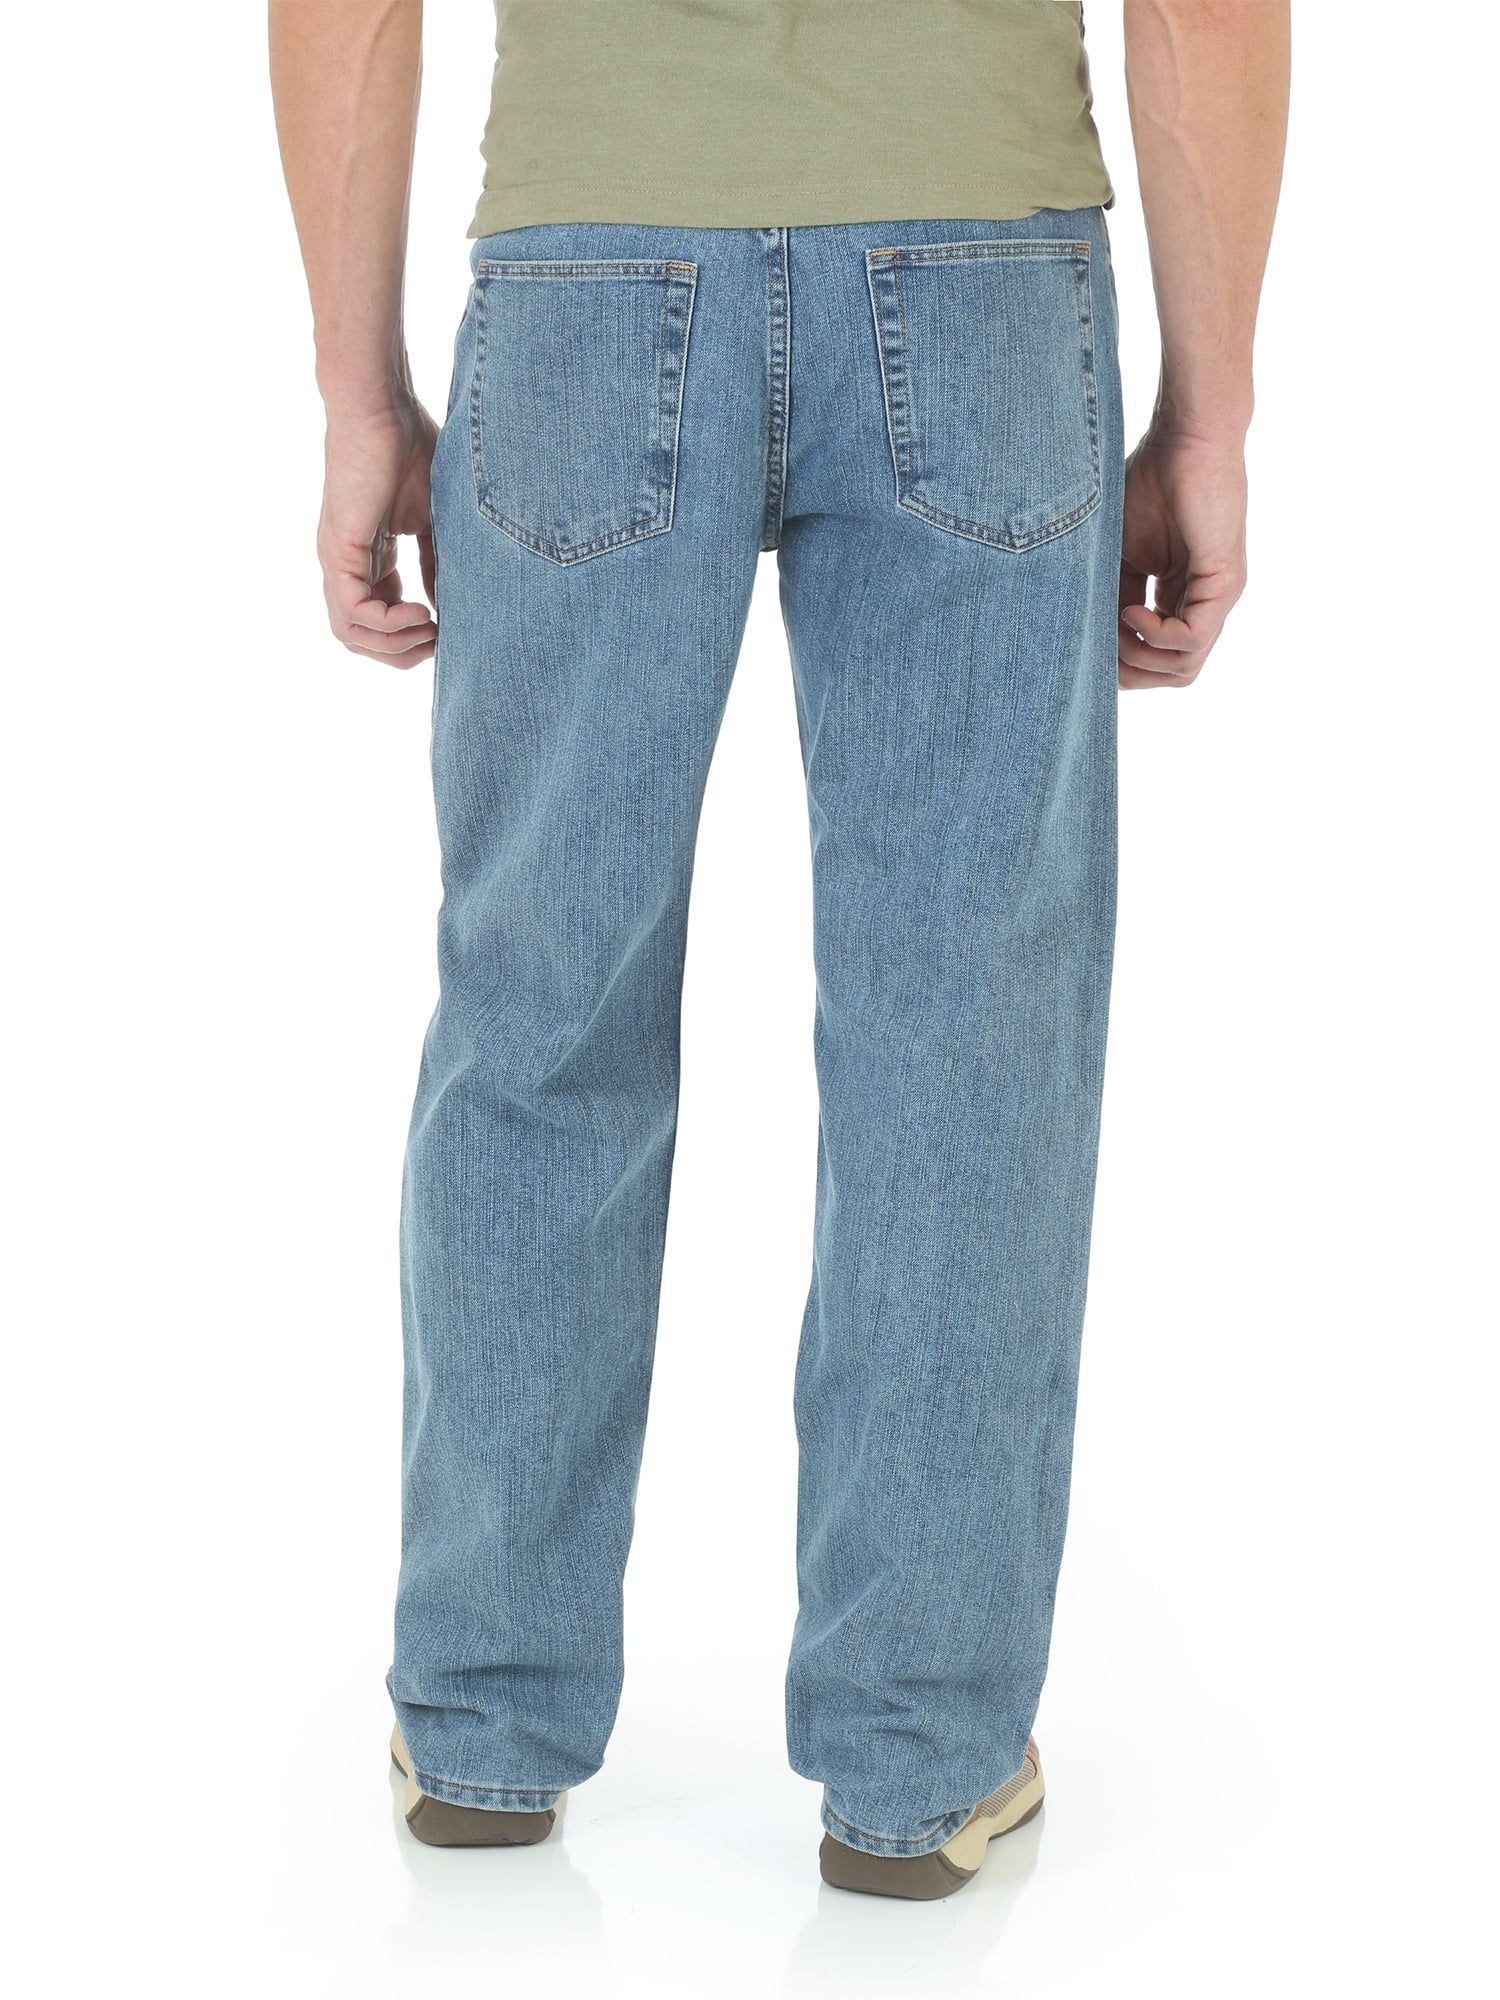 wrangler advanced comfort jeans walmart